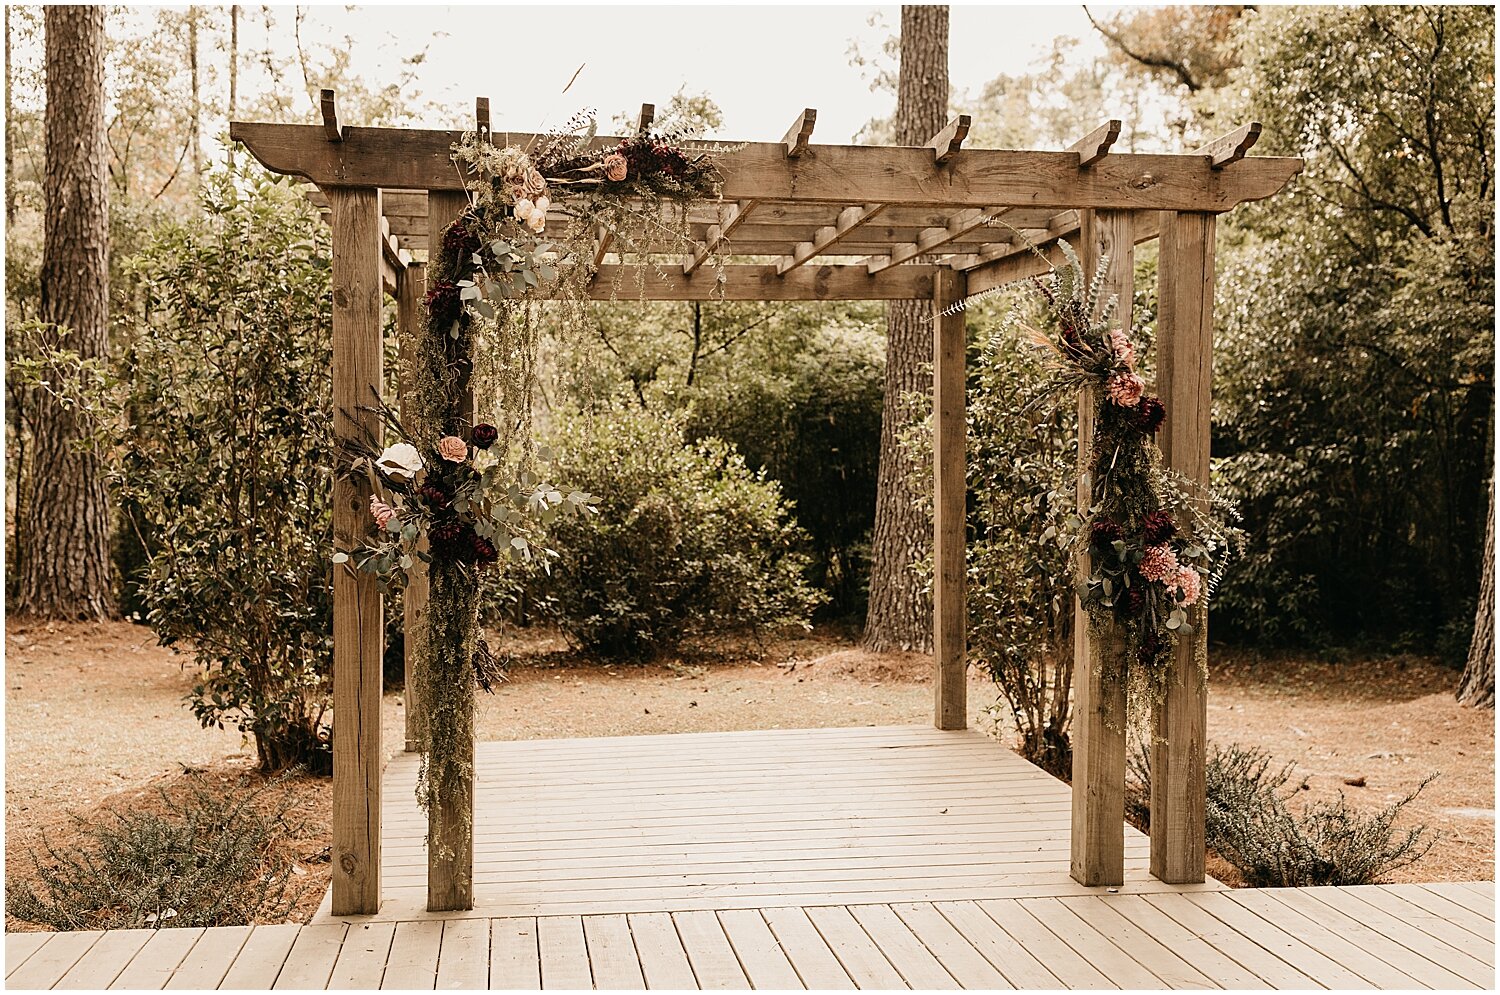  wedding arch for outdoor wedding ceremony  